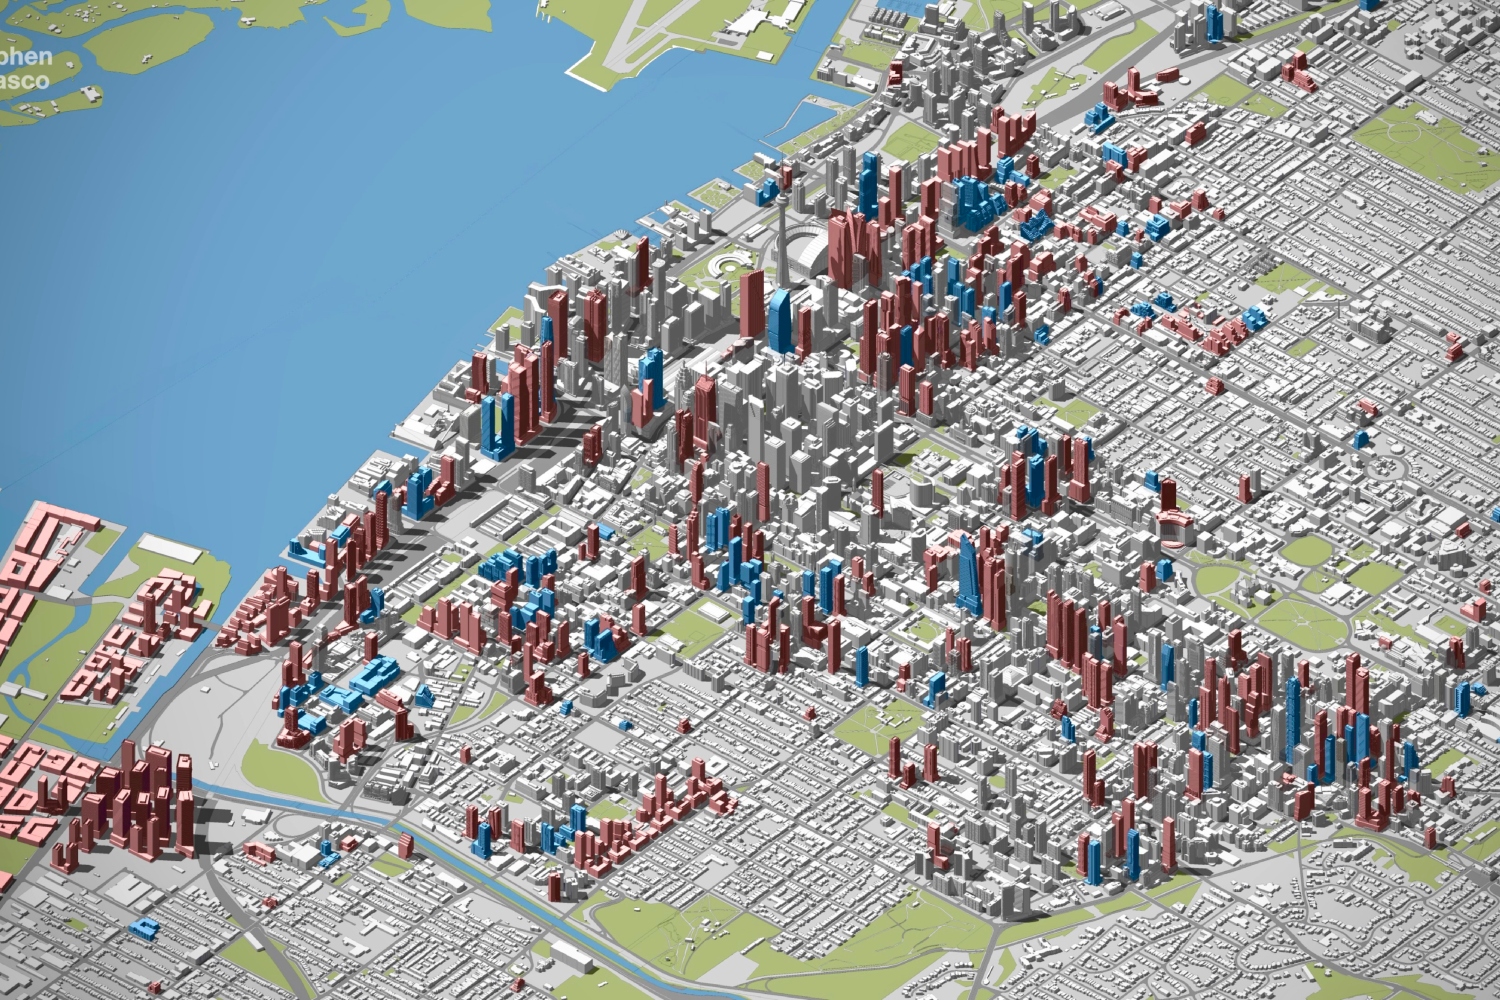 Toronto by 2030